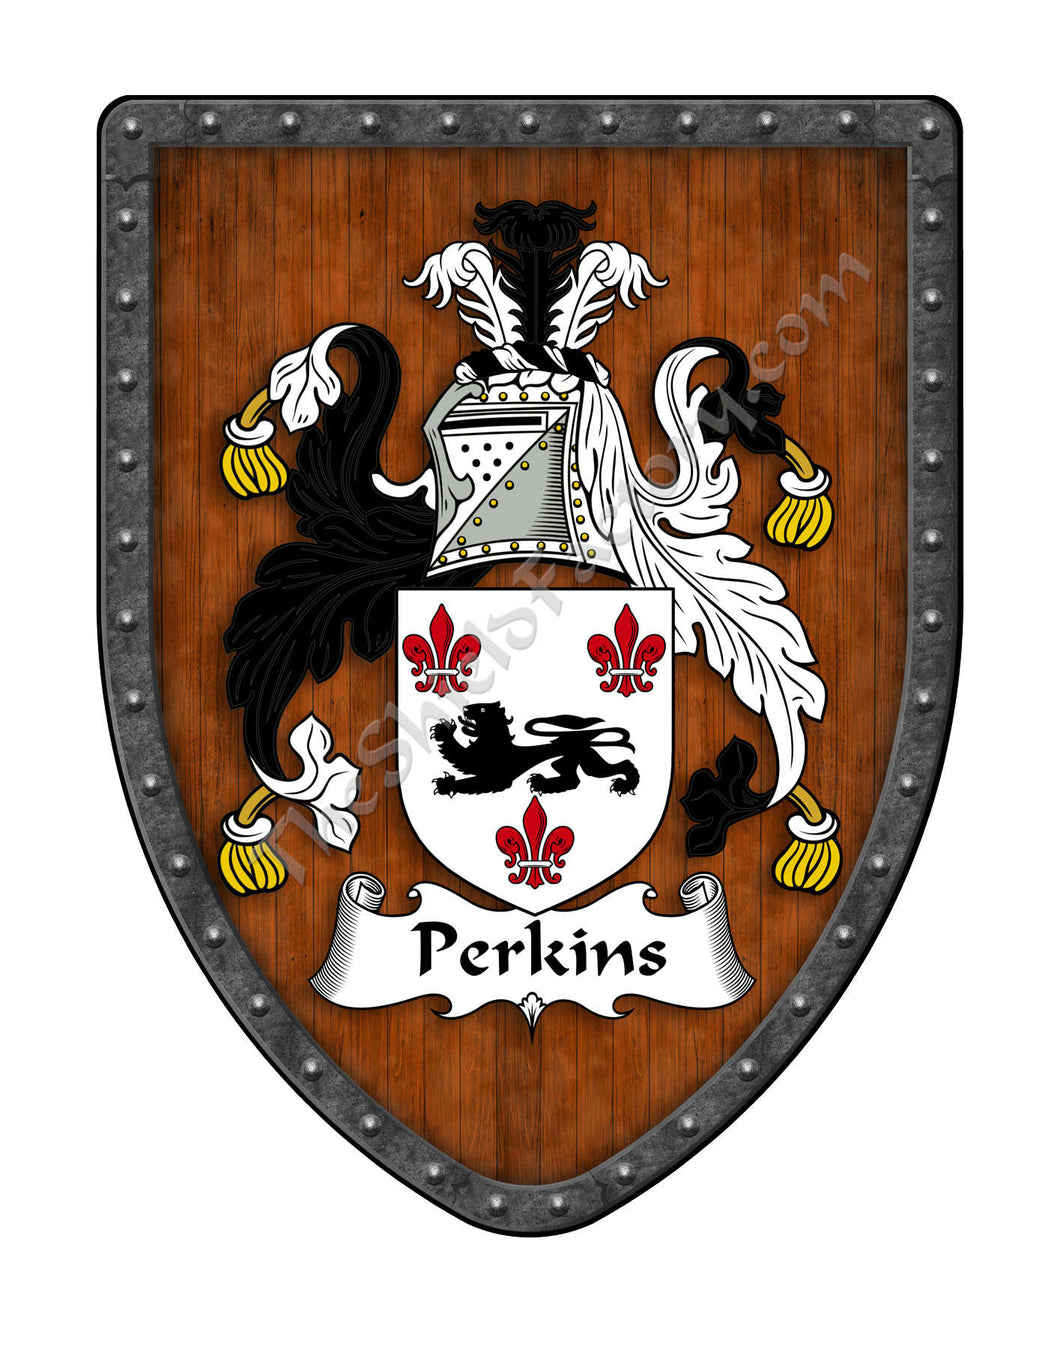 Perkins Coat of Arms Shield